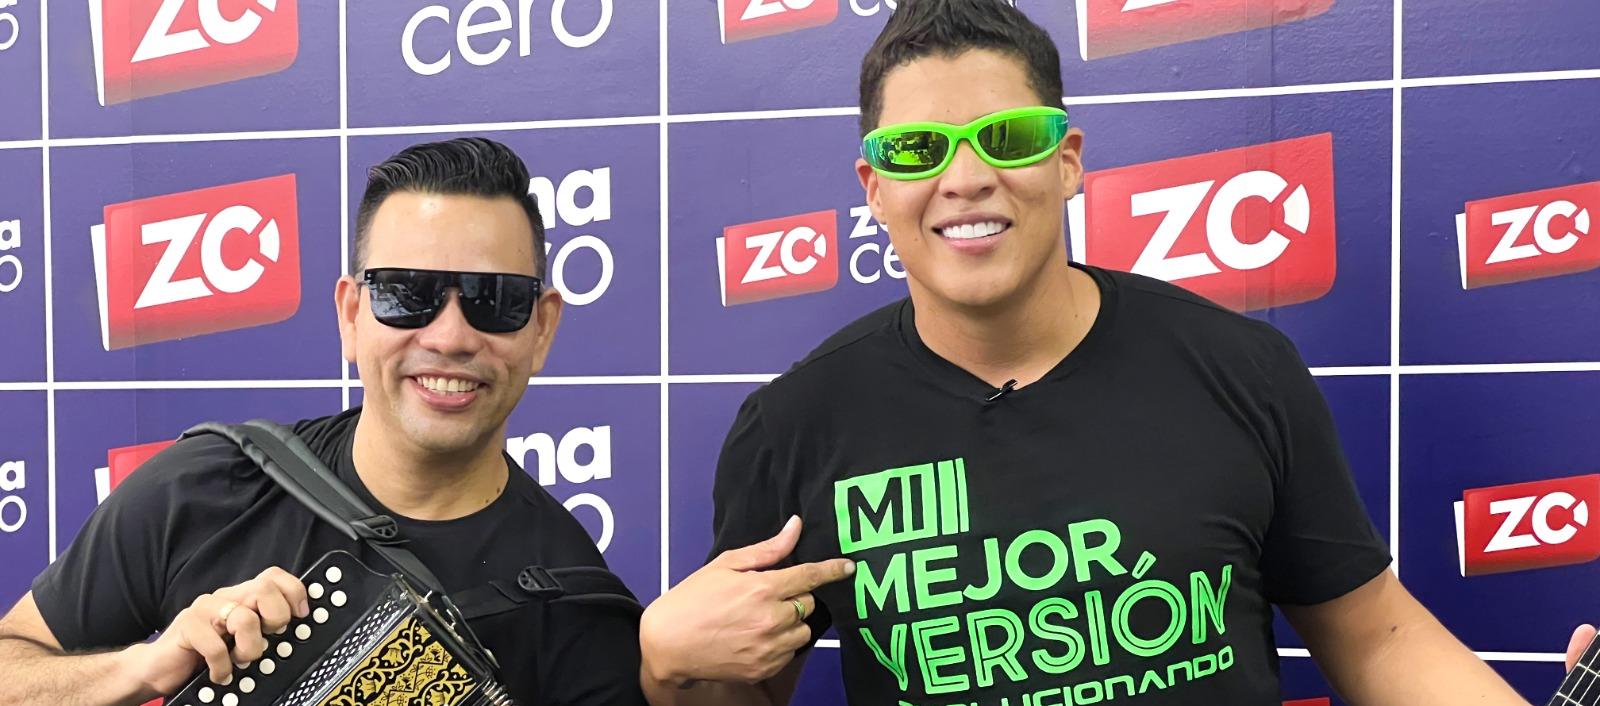 Rafa Pérez y Juank Padilla en la visita de este jueves a Zona Cero